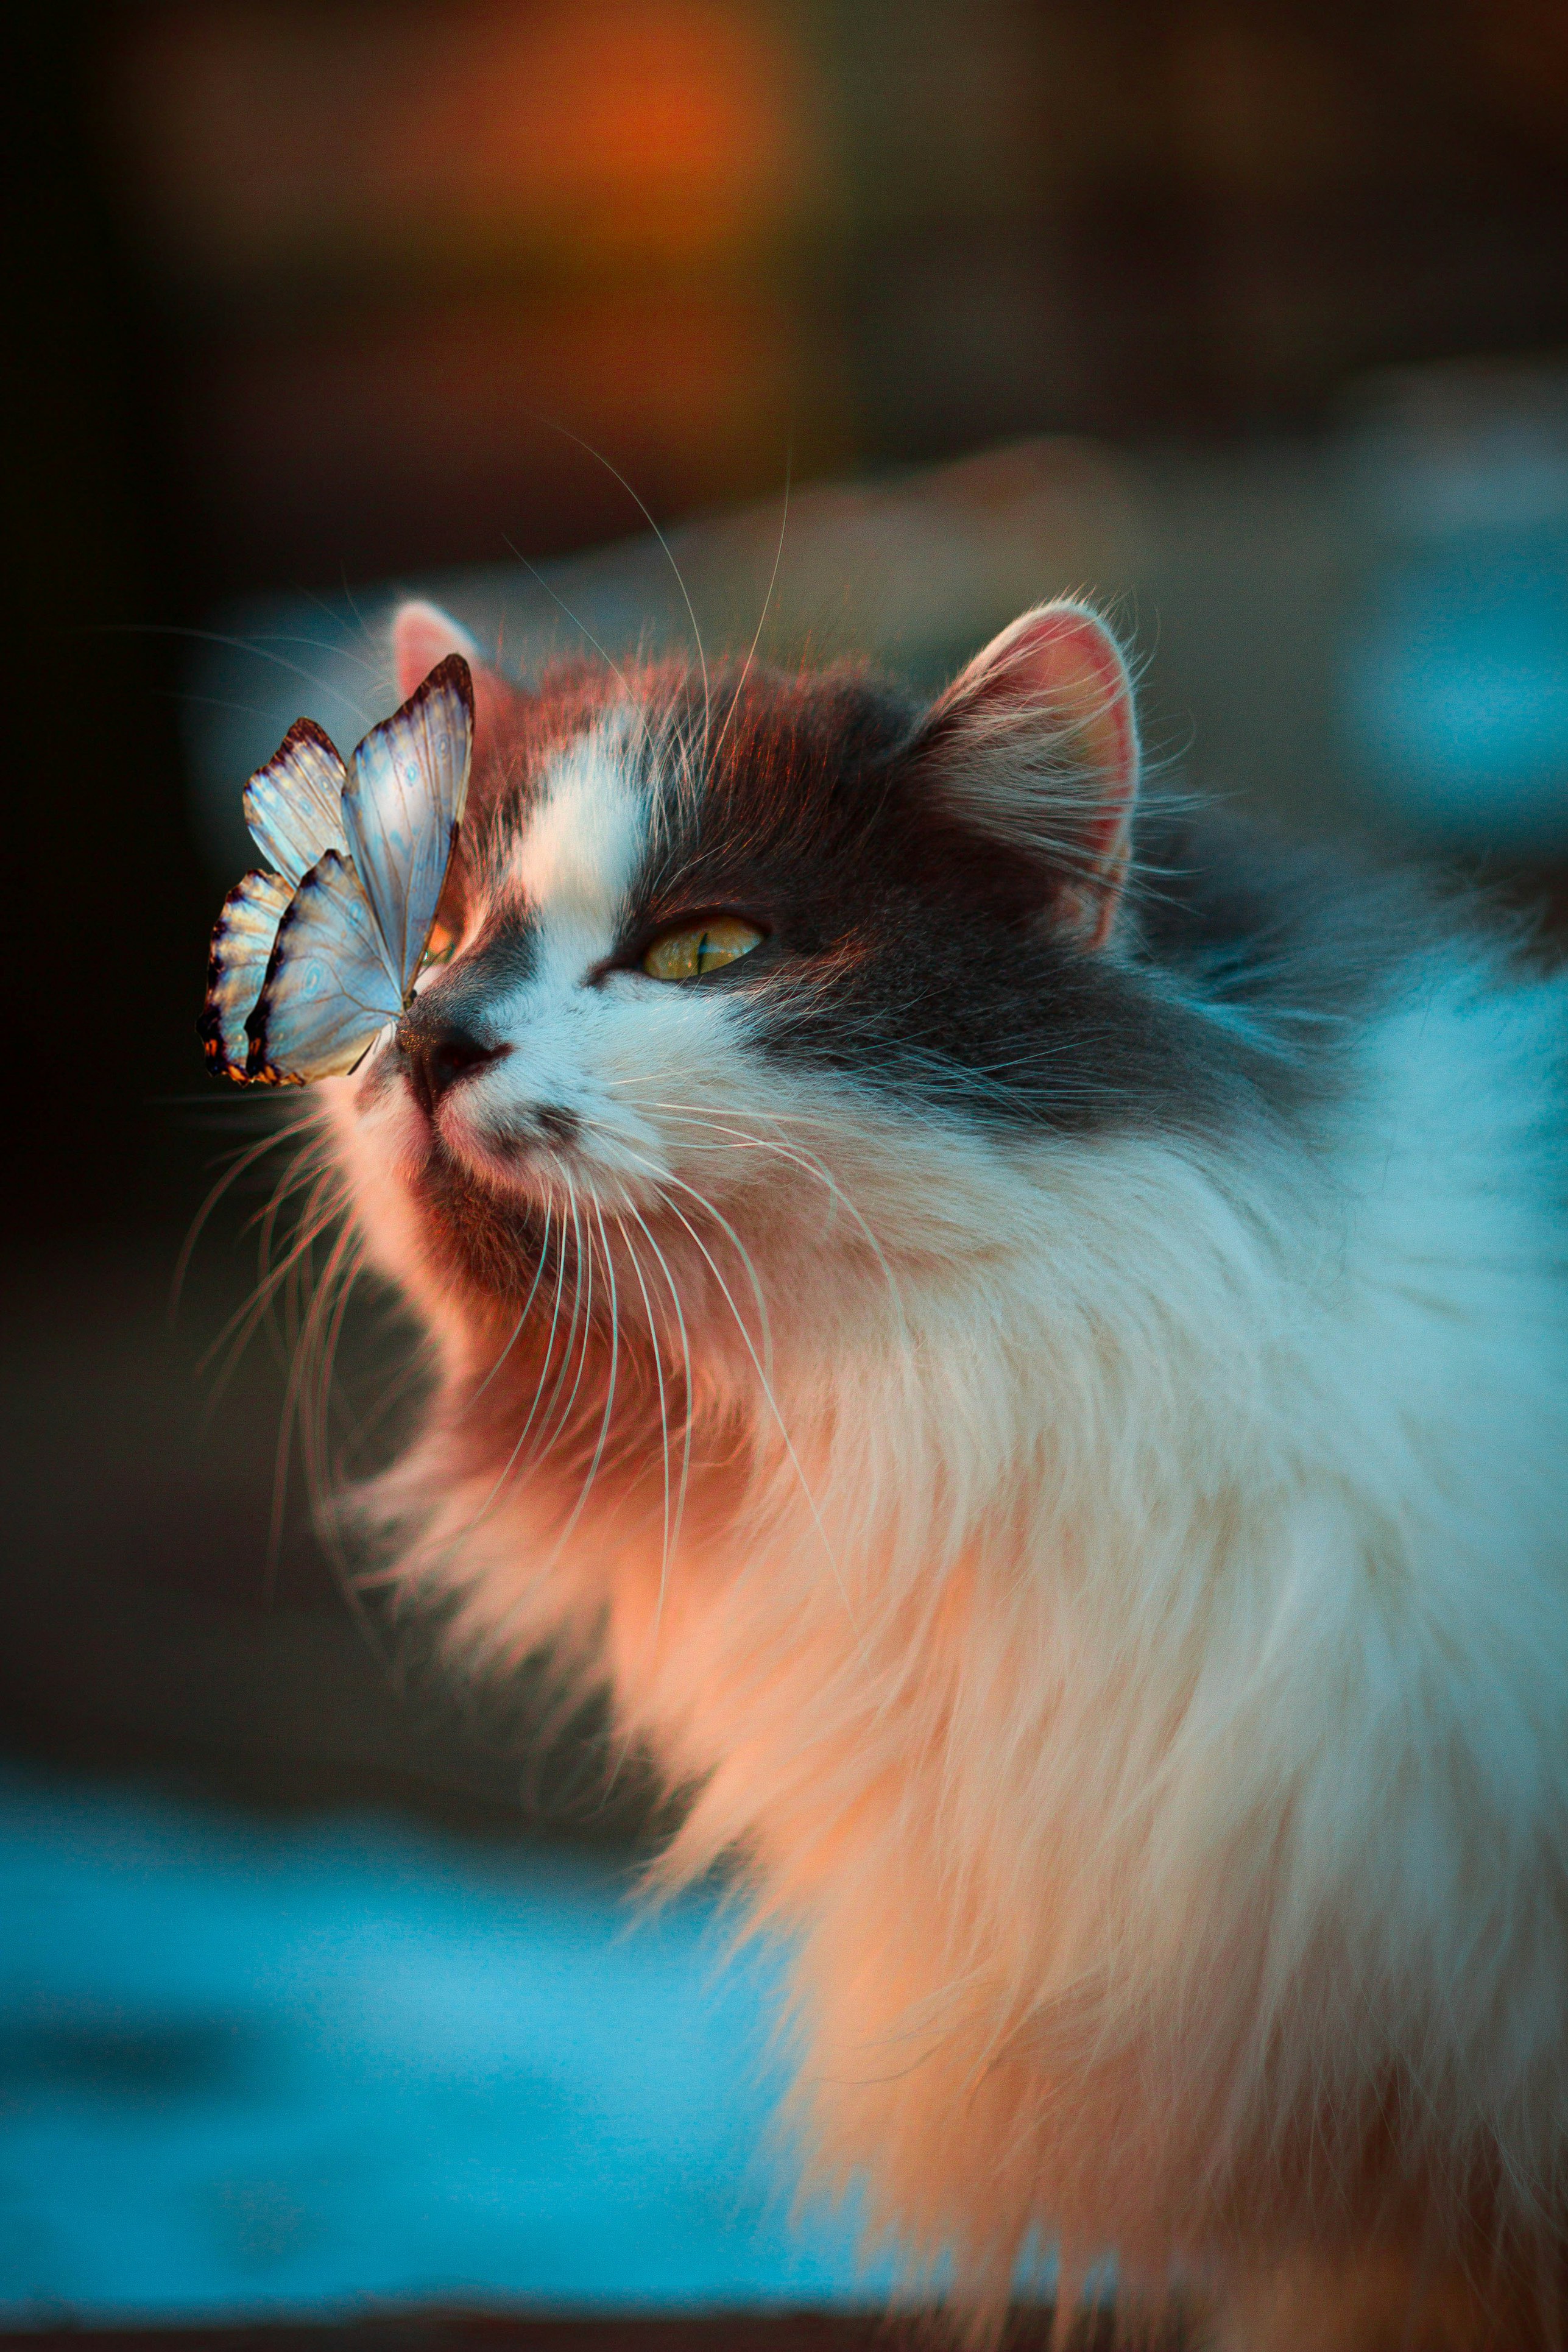 White butterfly resting on cat's nose. Photo by Karina Vorozheeva